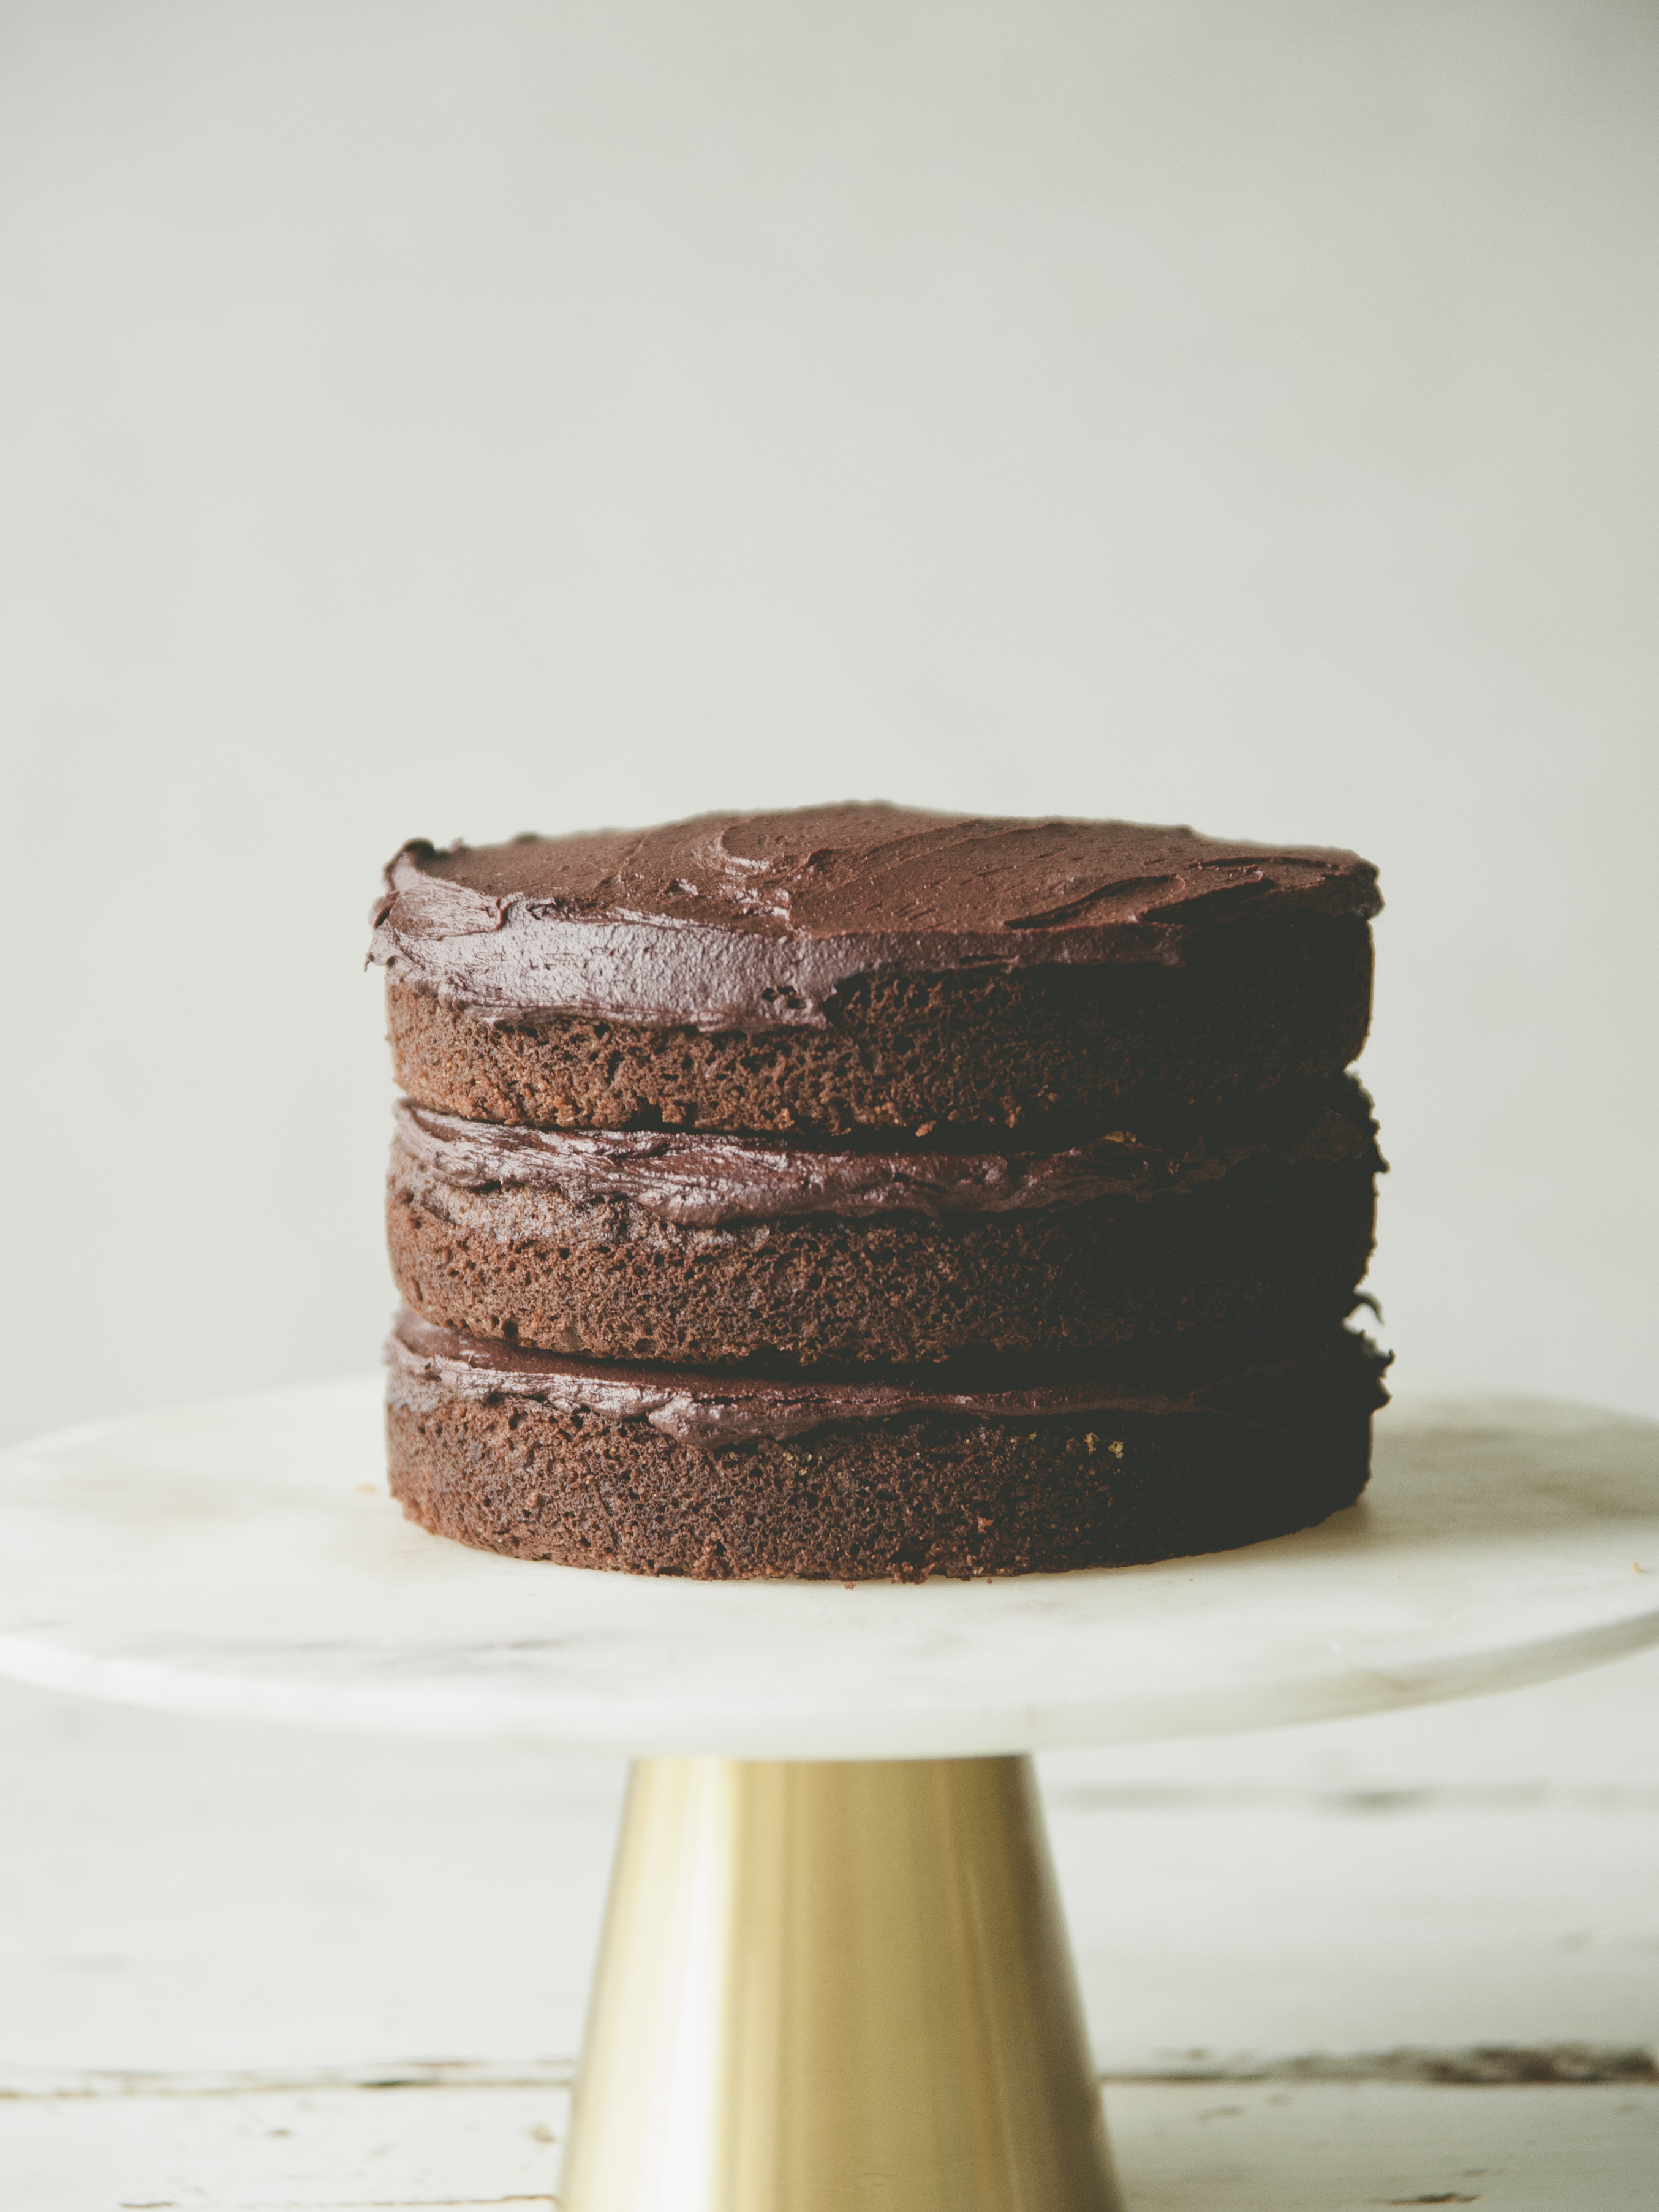 Low Carb Birthday Cake Alternatives
 Keto Cake Birthday Coconut Flour Low Carb Alternatives For